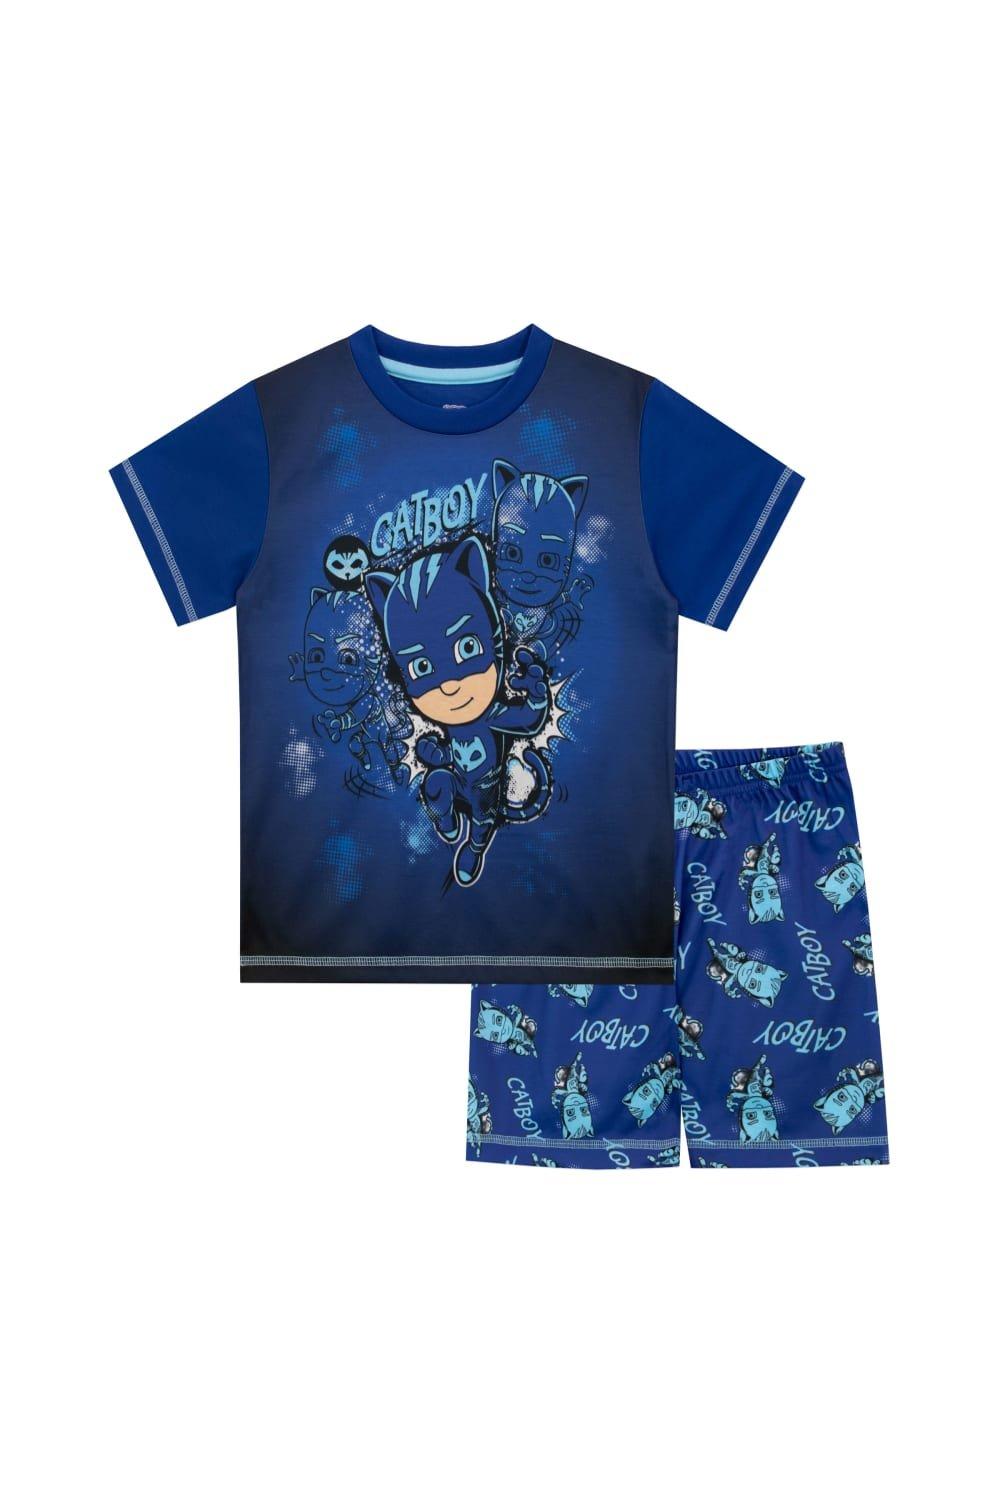 Короткая пижама Catboy PJ Masks, синий